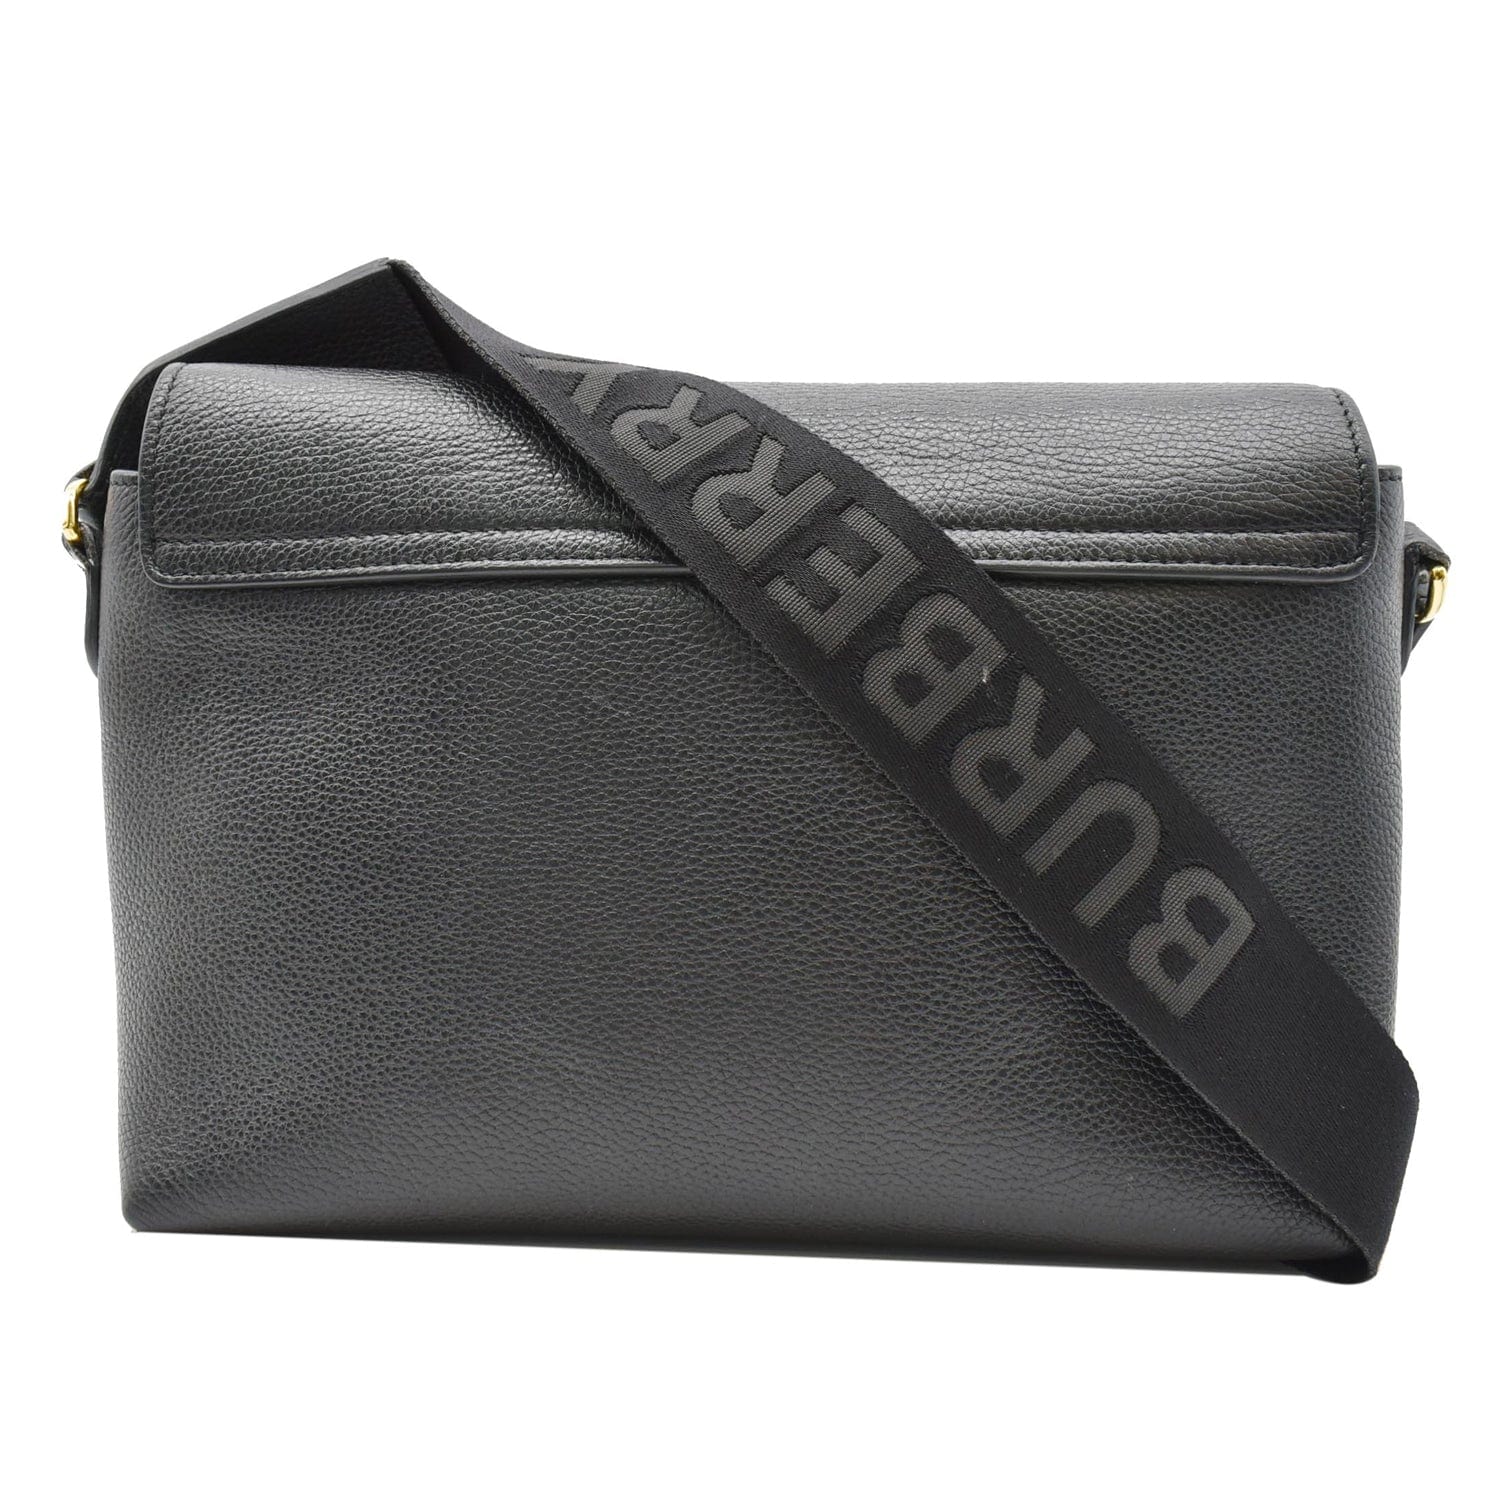 Burberry Note Bag, Black